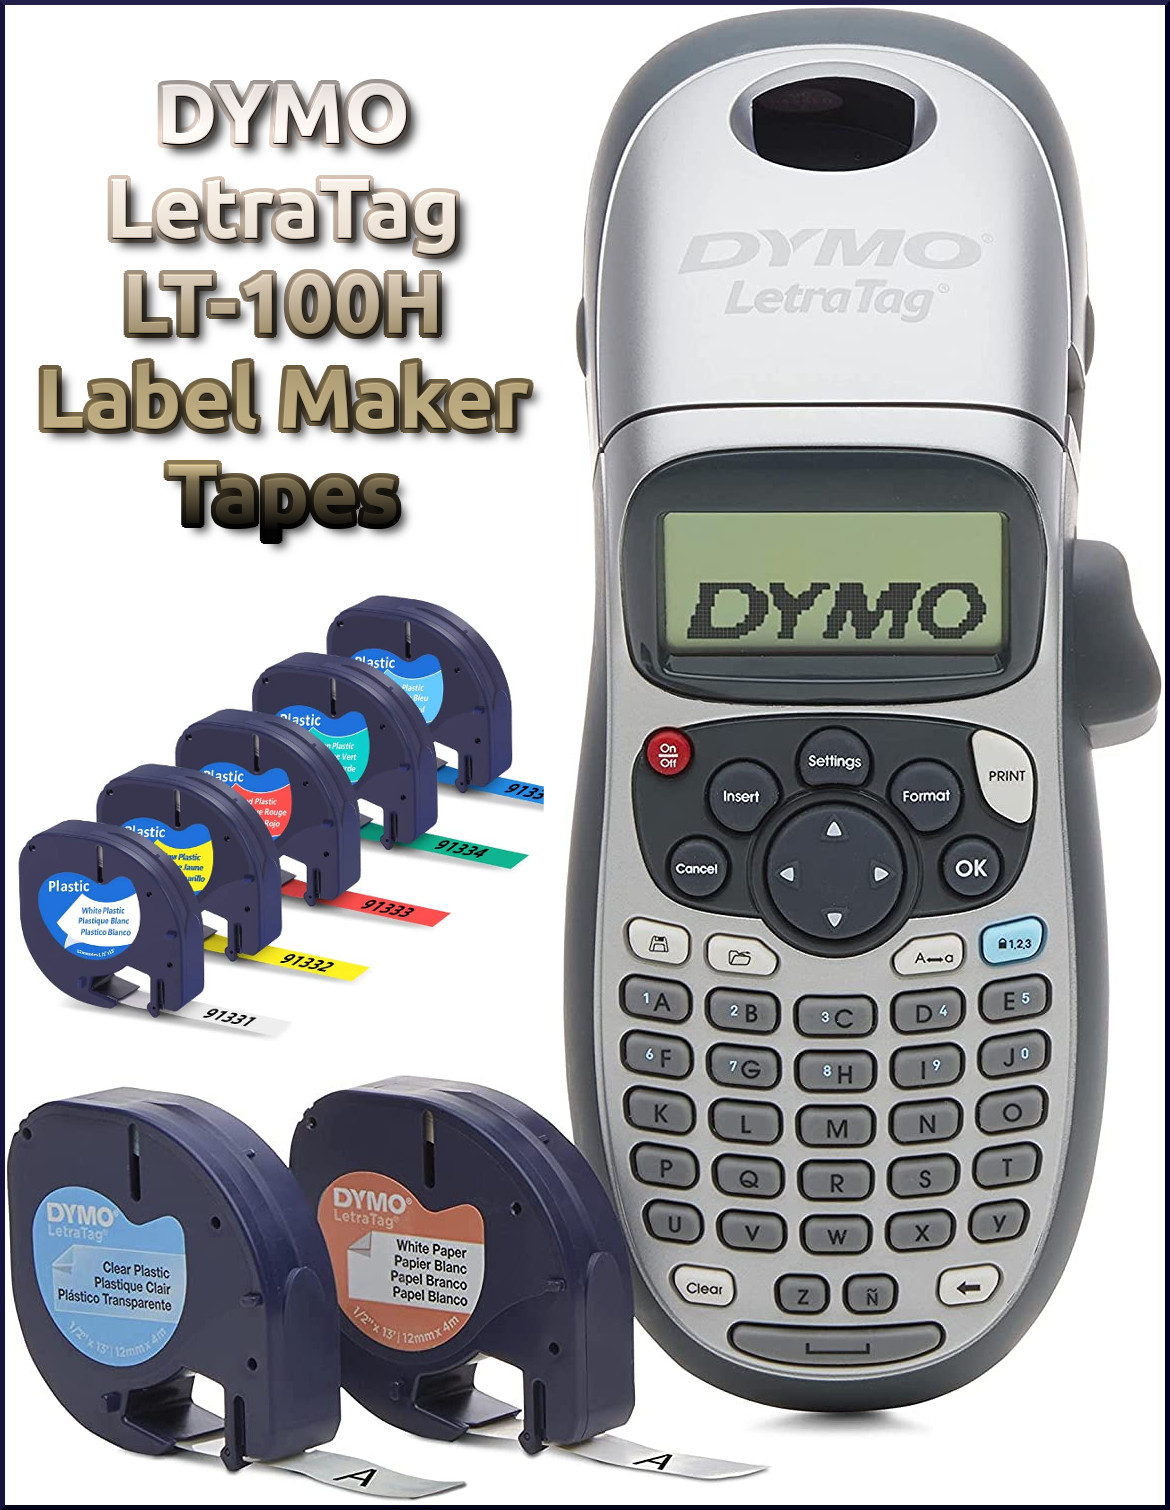 DYMO LetraTag LT100H Label Maker Label Tapes & Accessories